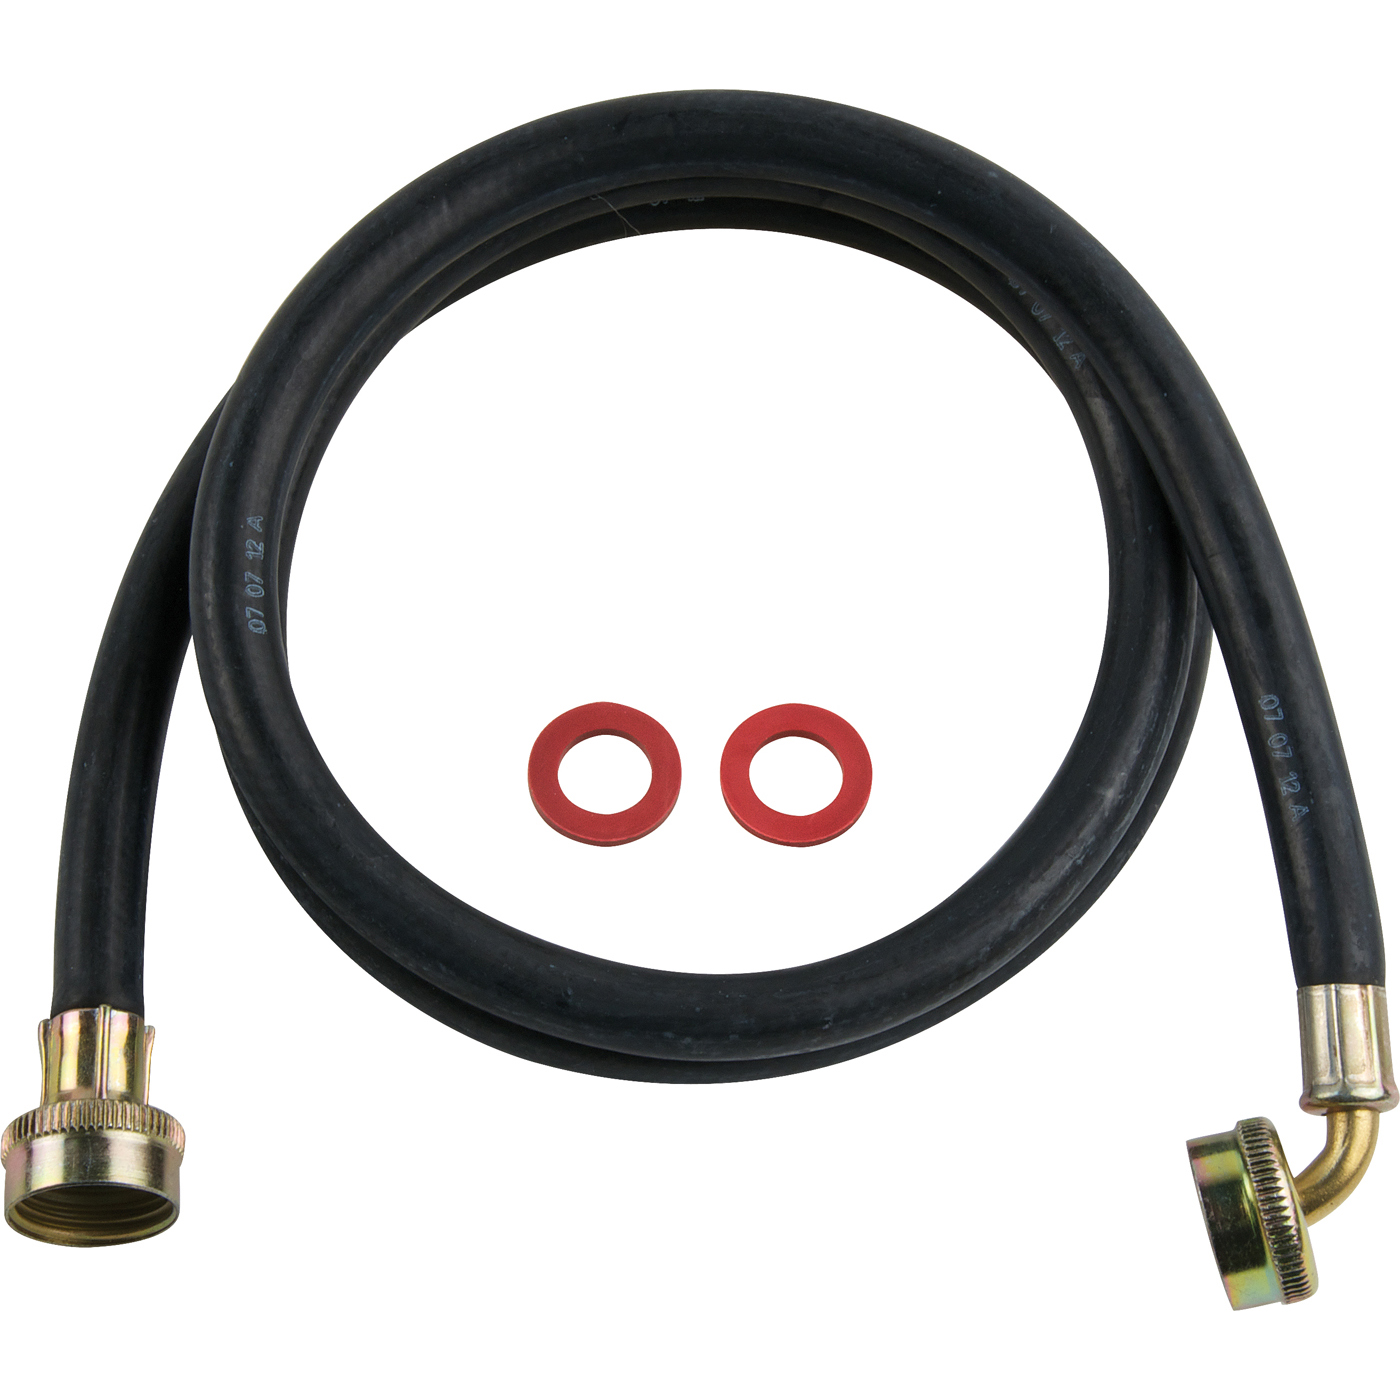 High pressure washing machine fill hose - 90° - Master Plumber®